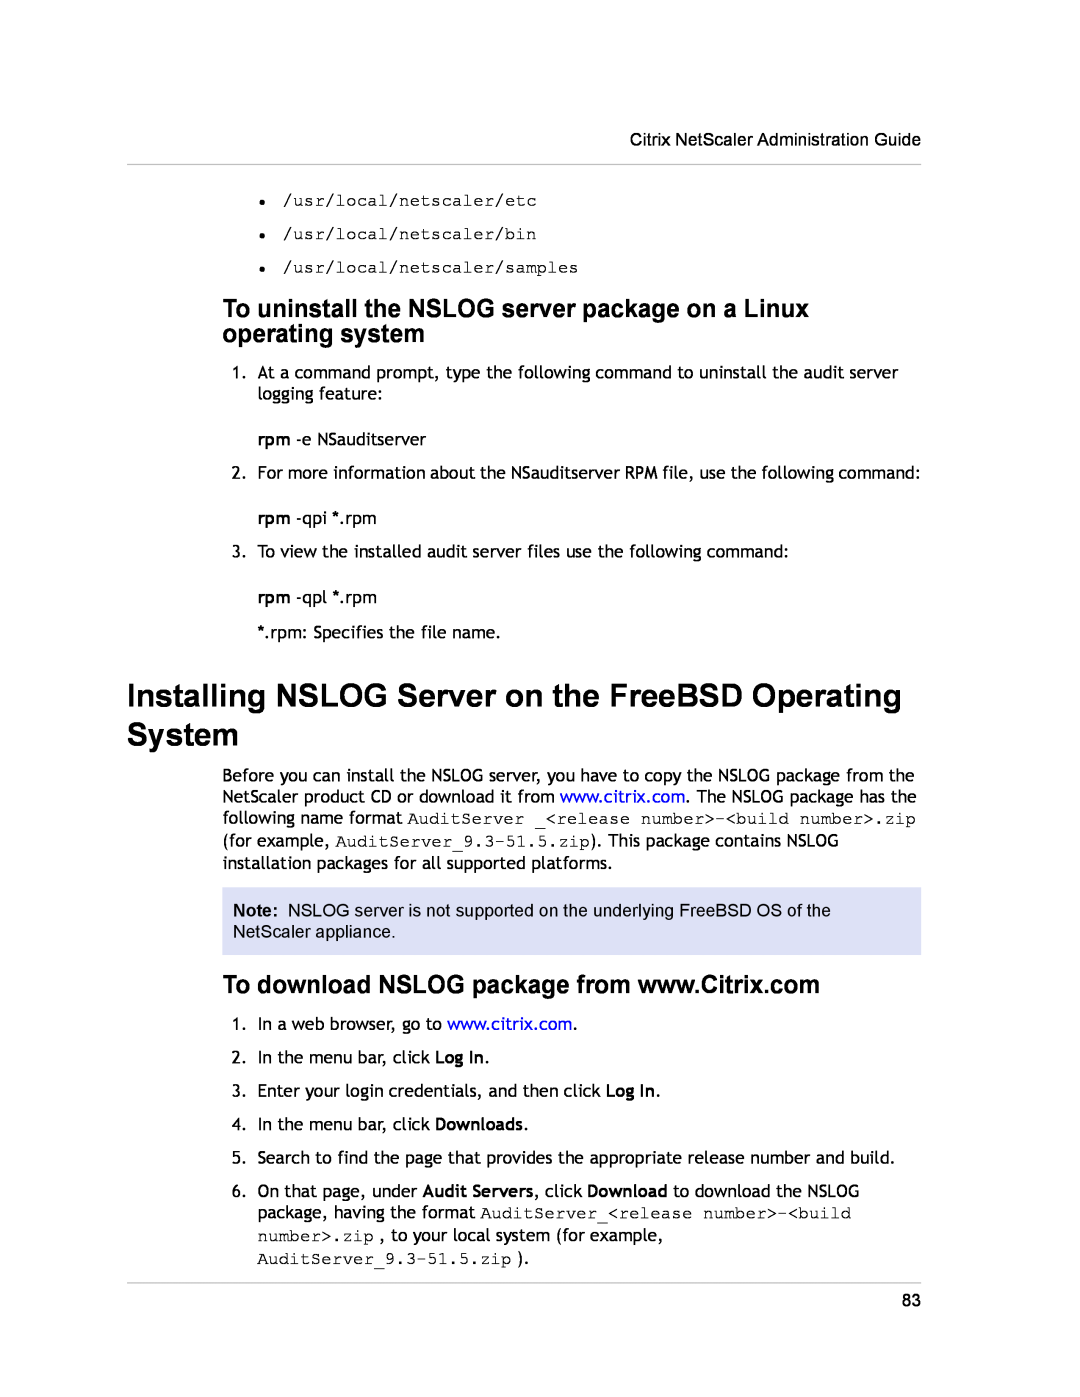 Citrix Systems CITRIX NETSCALER 9.3 manual Installing NSLOG Server on the FreeBSD Operating System 